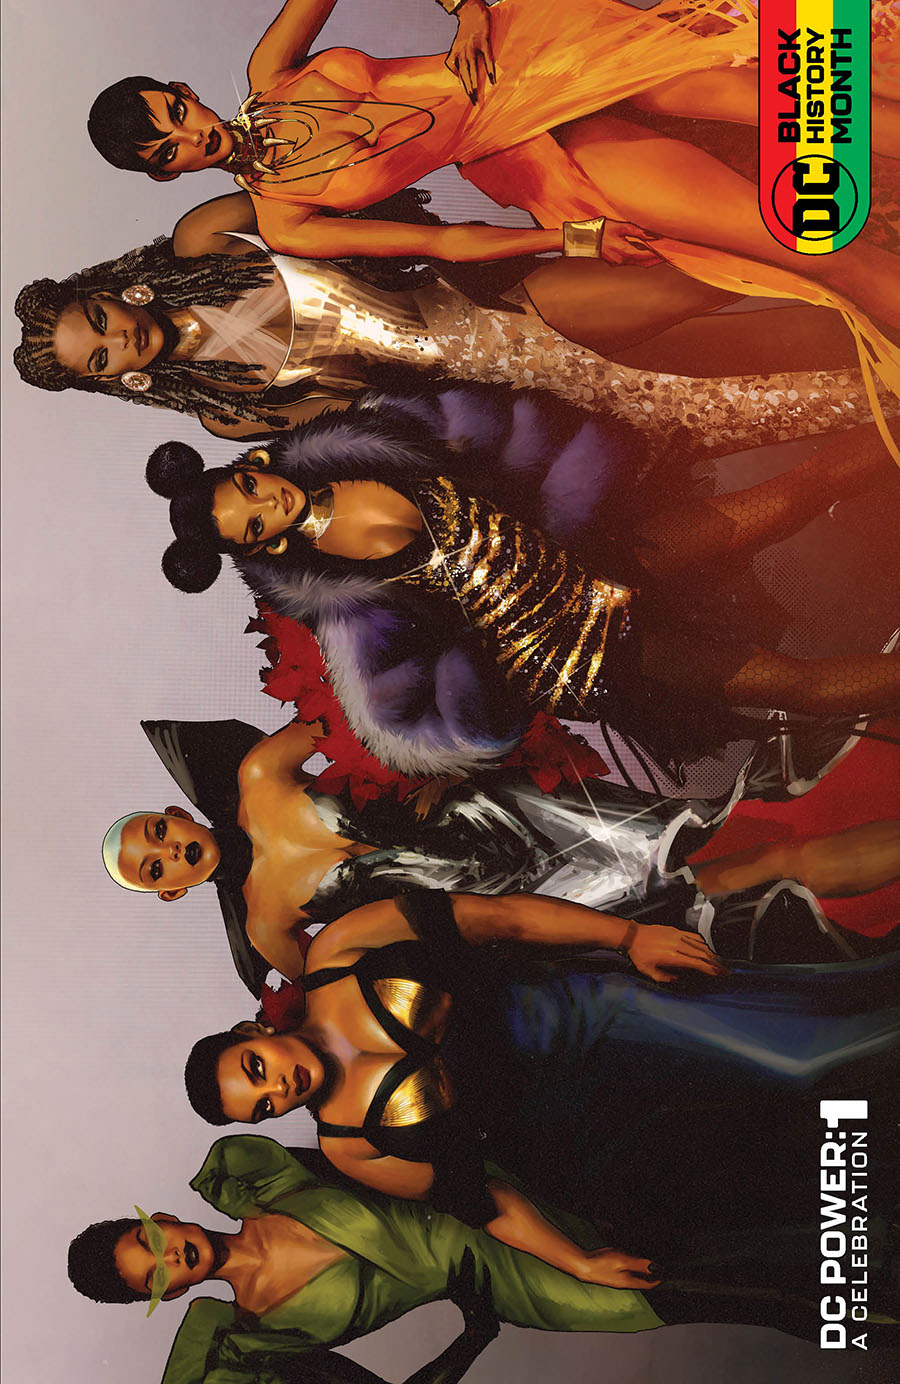 DC Power A Celebration #1 (One Shot) Cover F 2nd Ptg Sozomaika Variant Cover